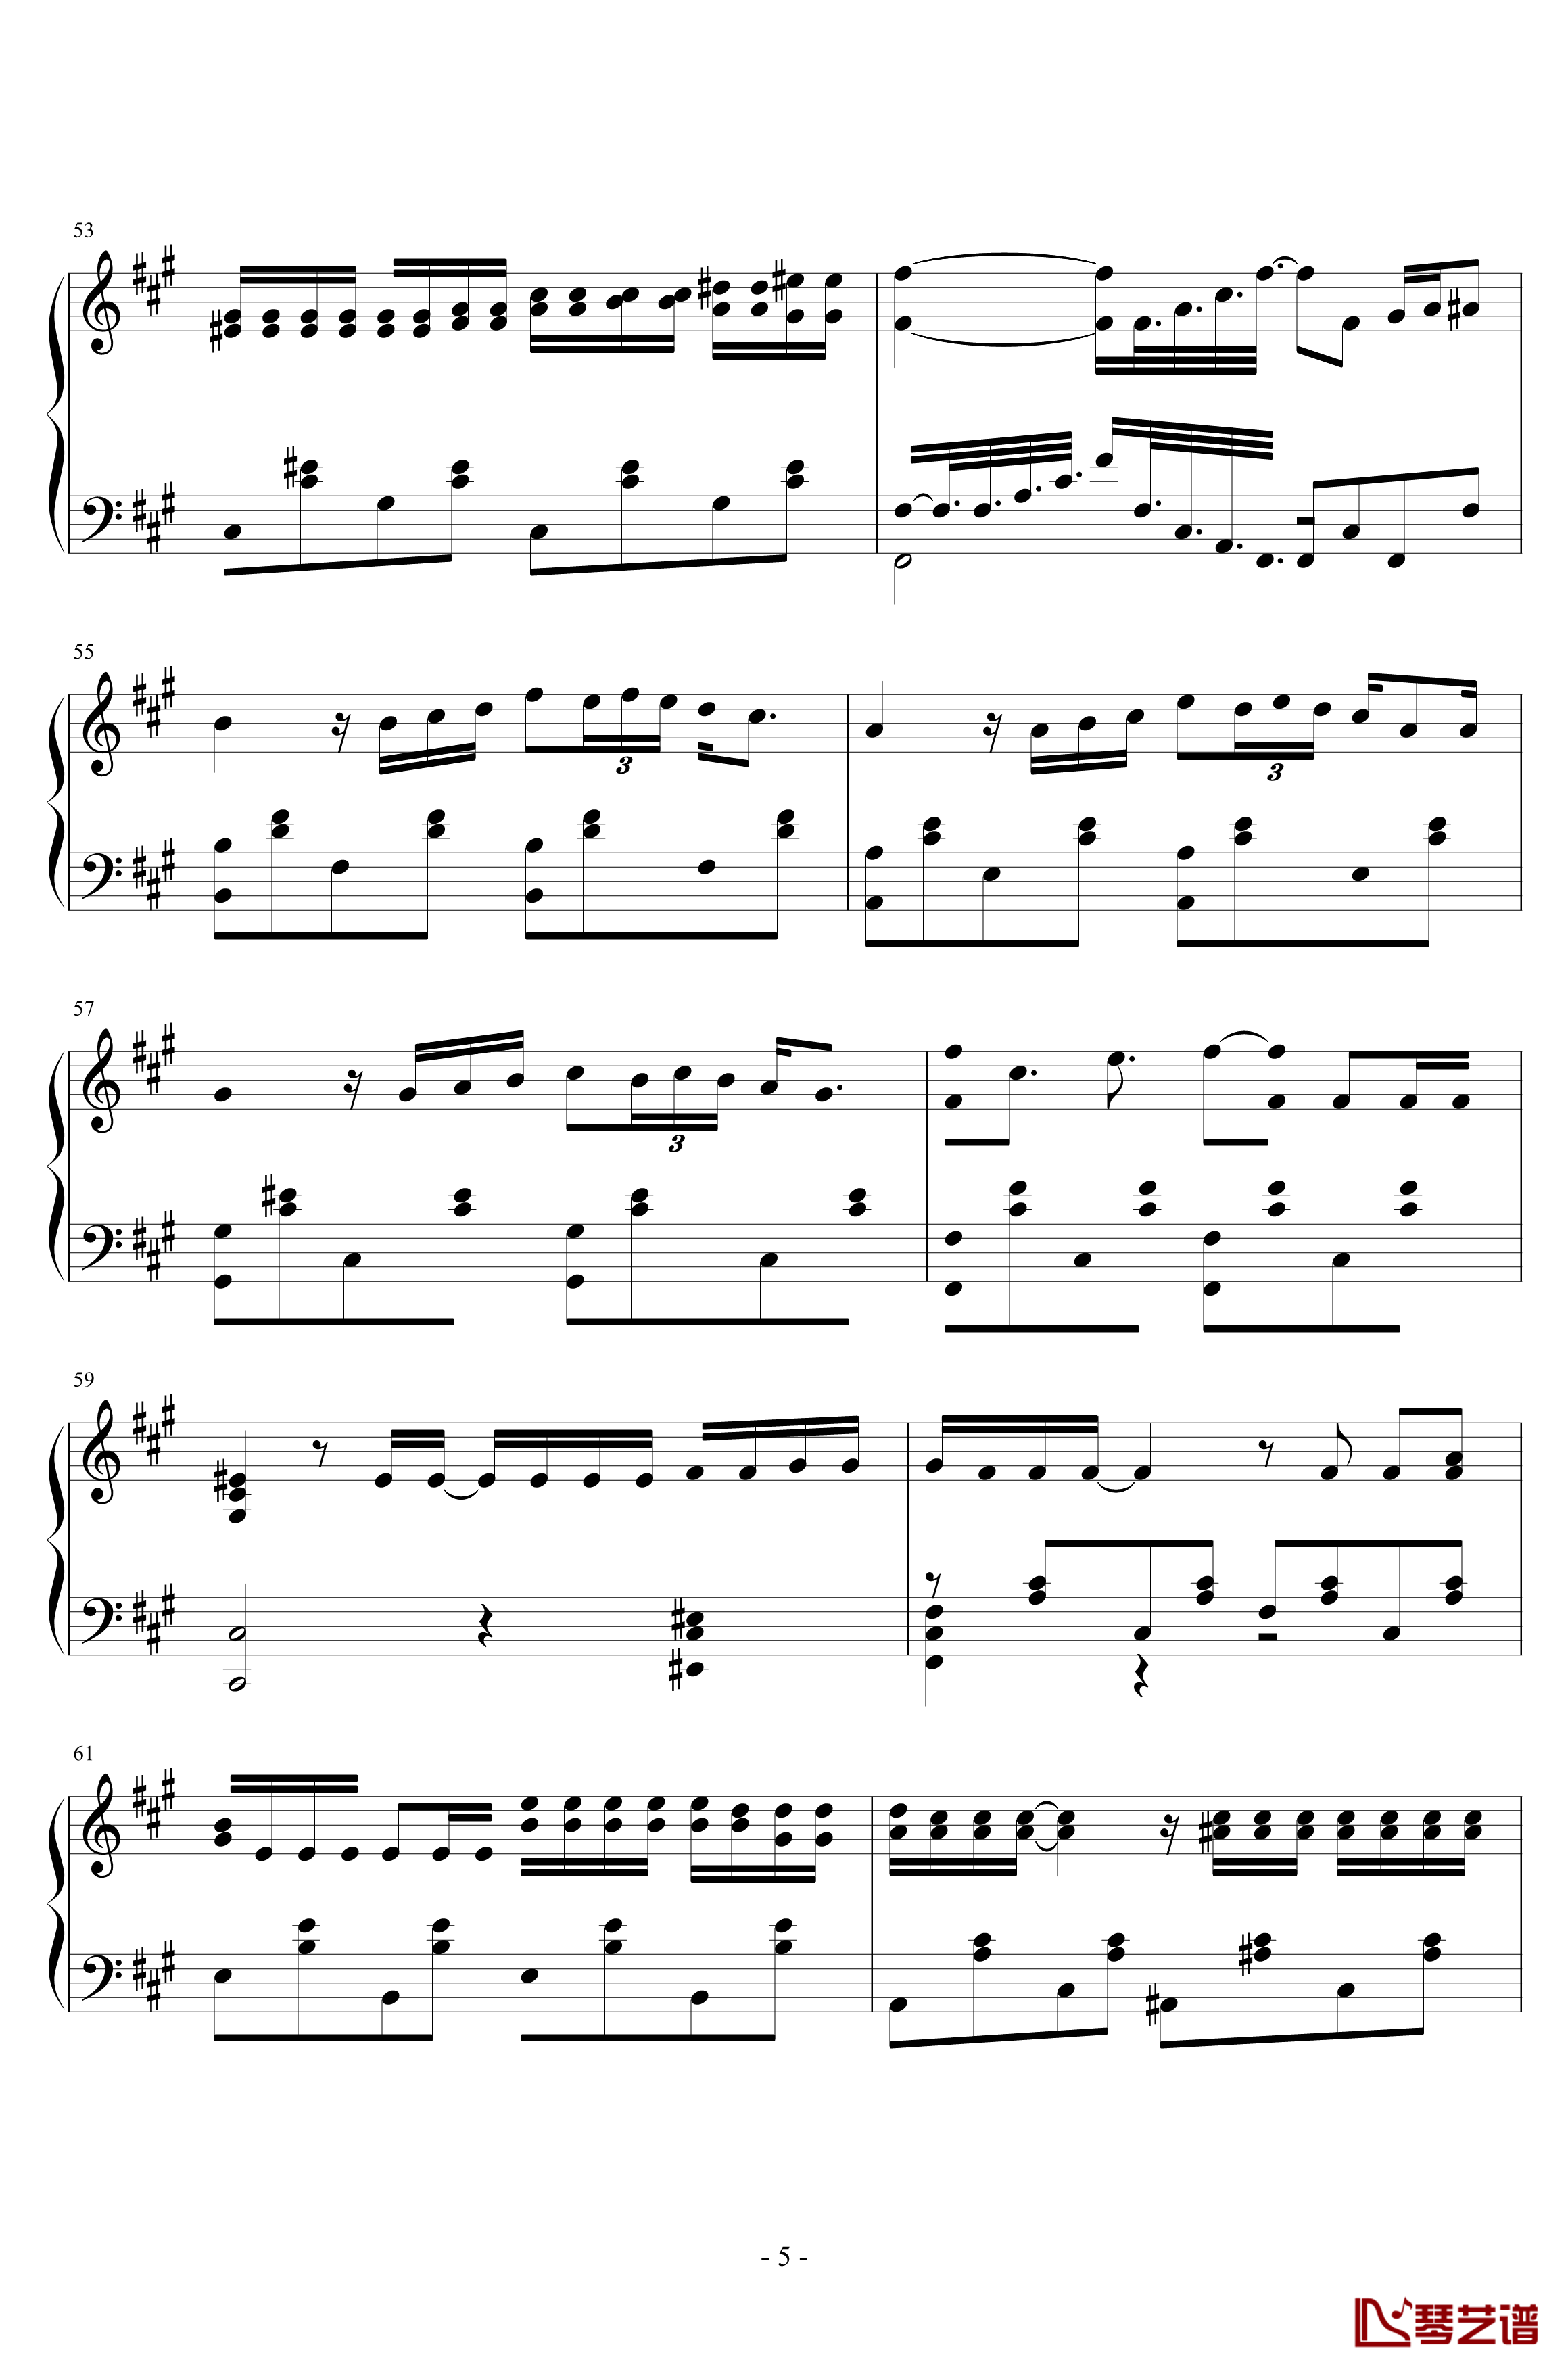 SNOBBISM钢琴谱 -Neru5